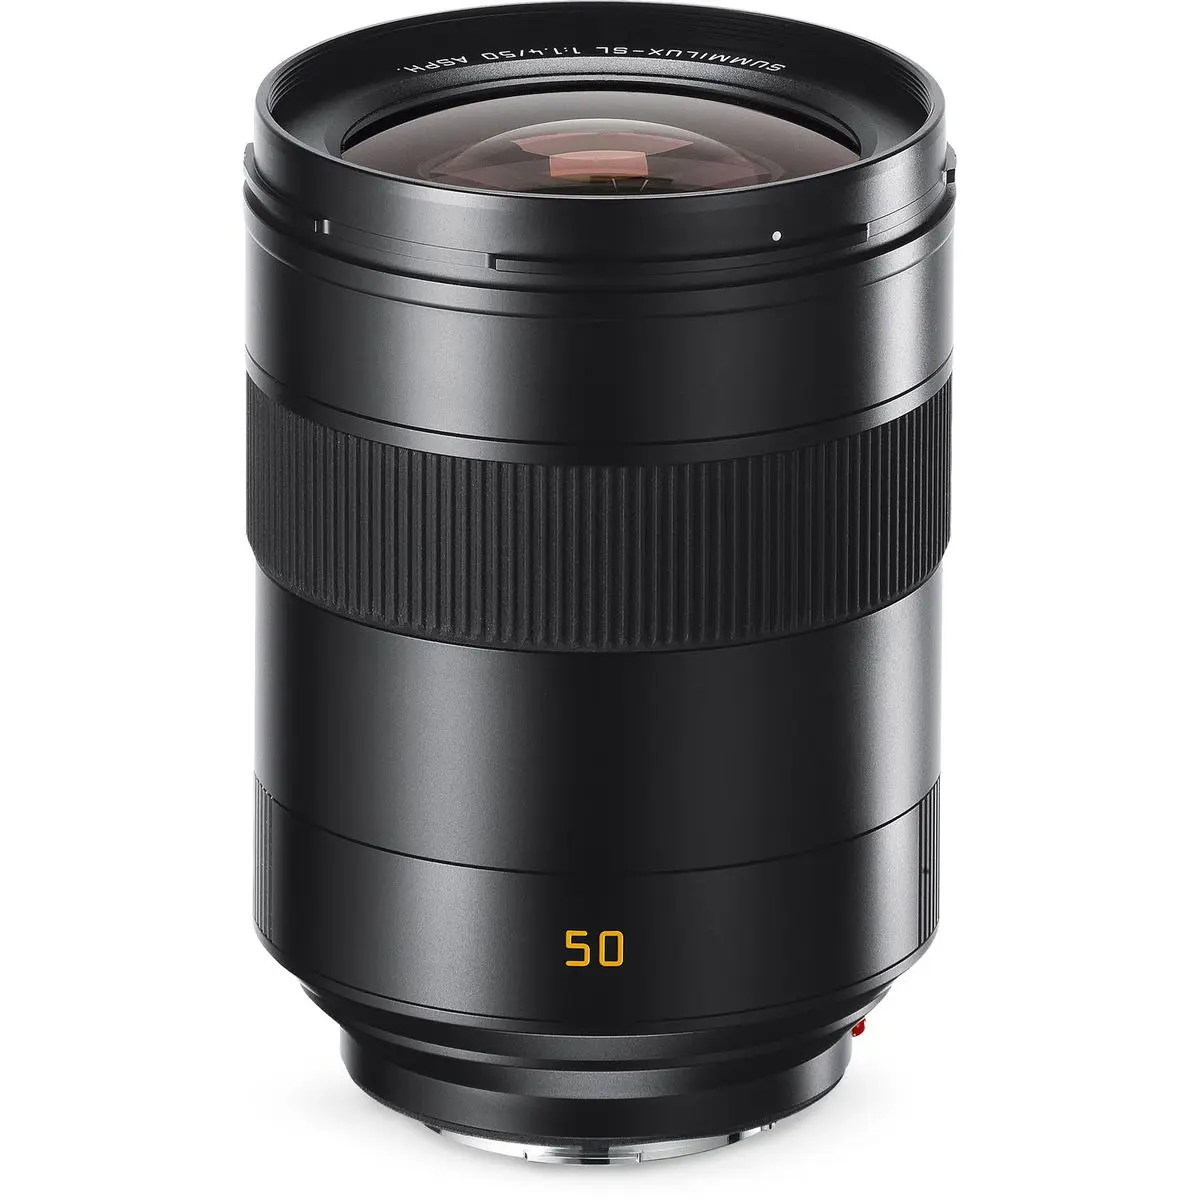 Main Image Leica Summilux-SL 50mm f/1.4 ASPH (11180) Lens